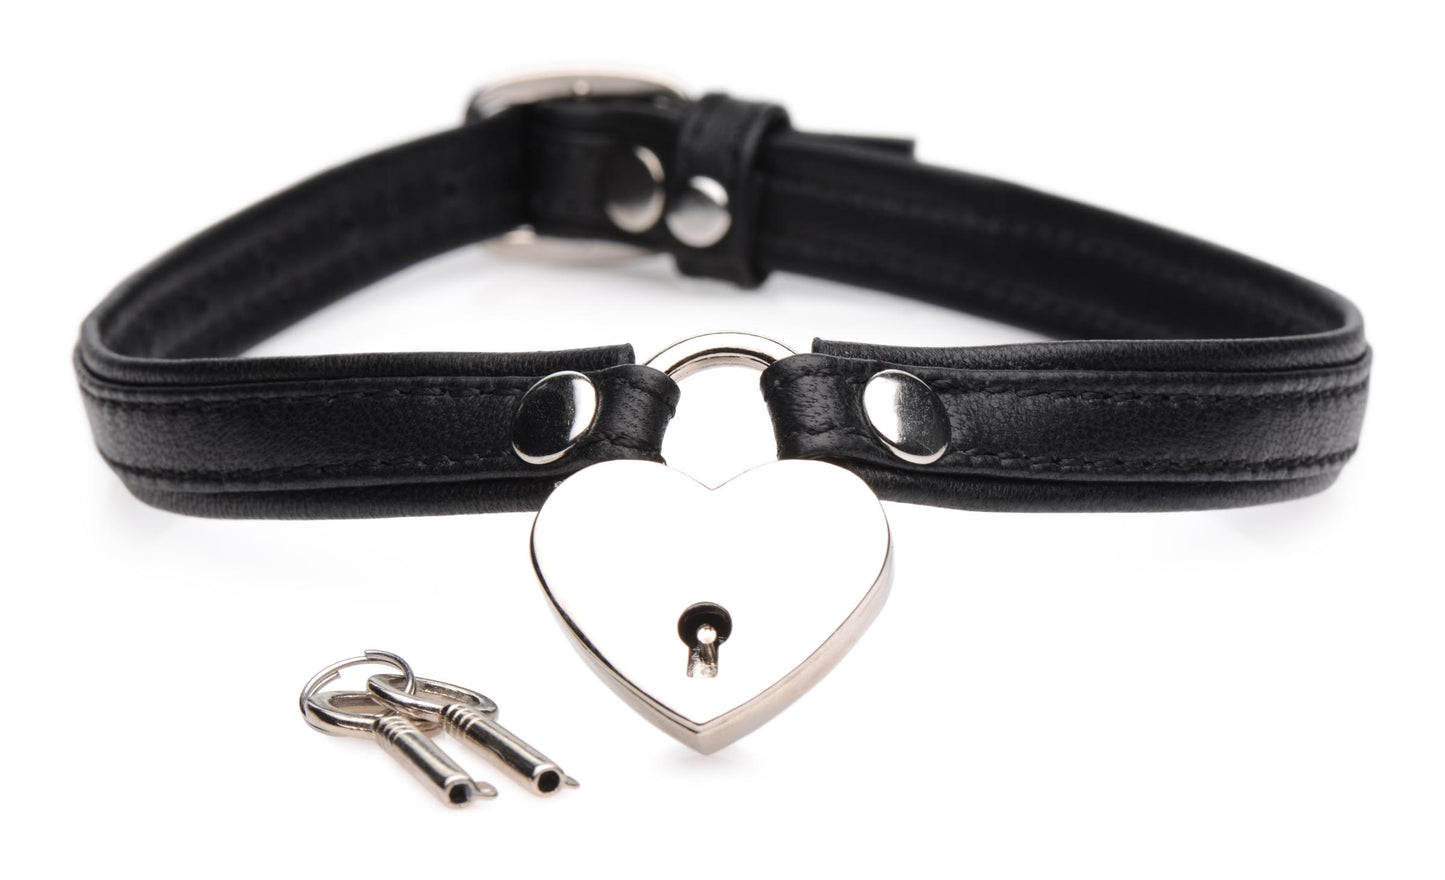 Heart Lock Leather Choker with Lock and Key - Black - UABDSM